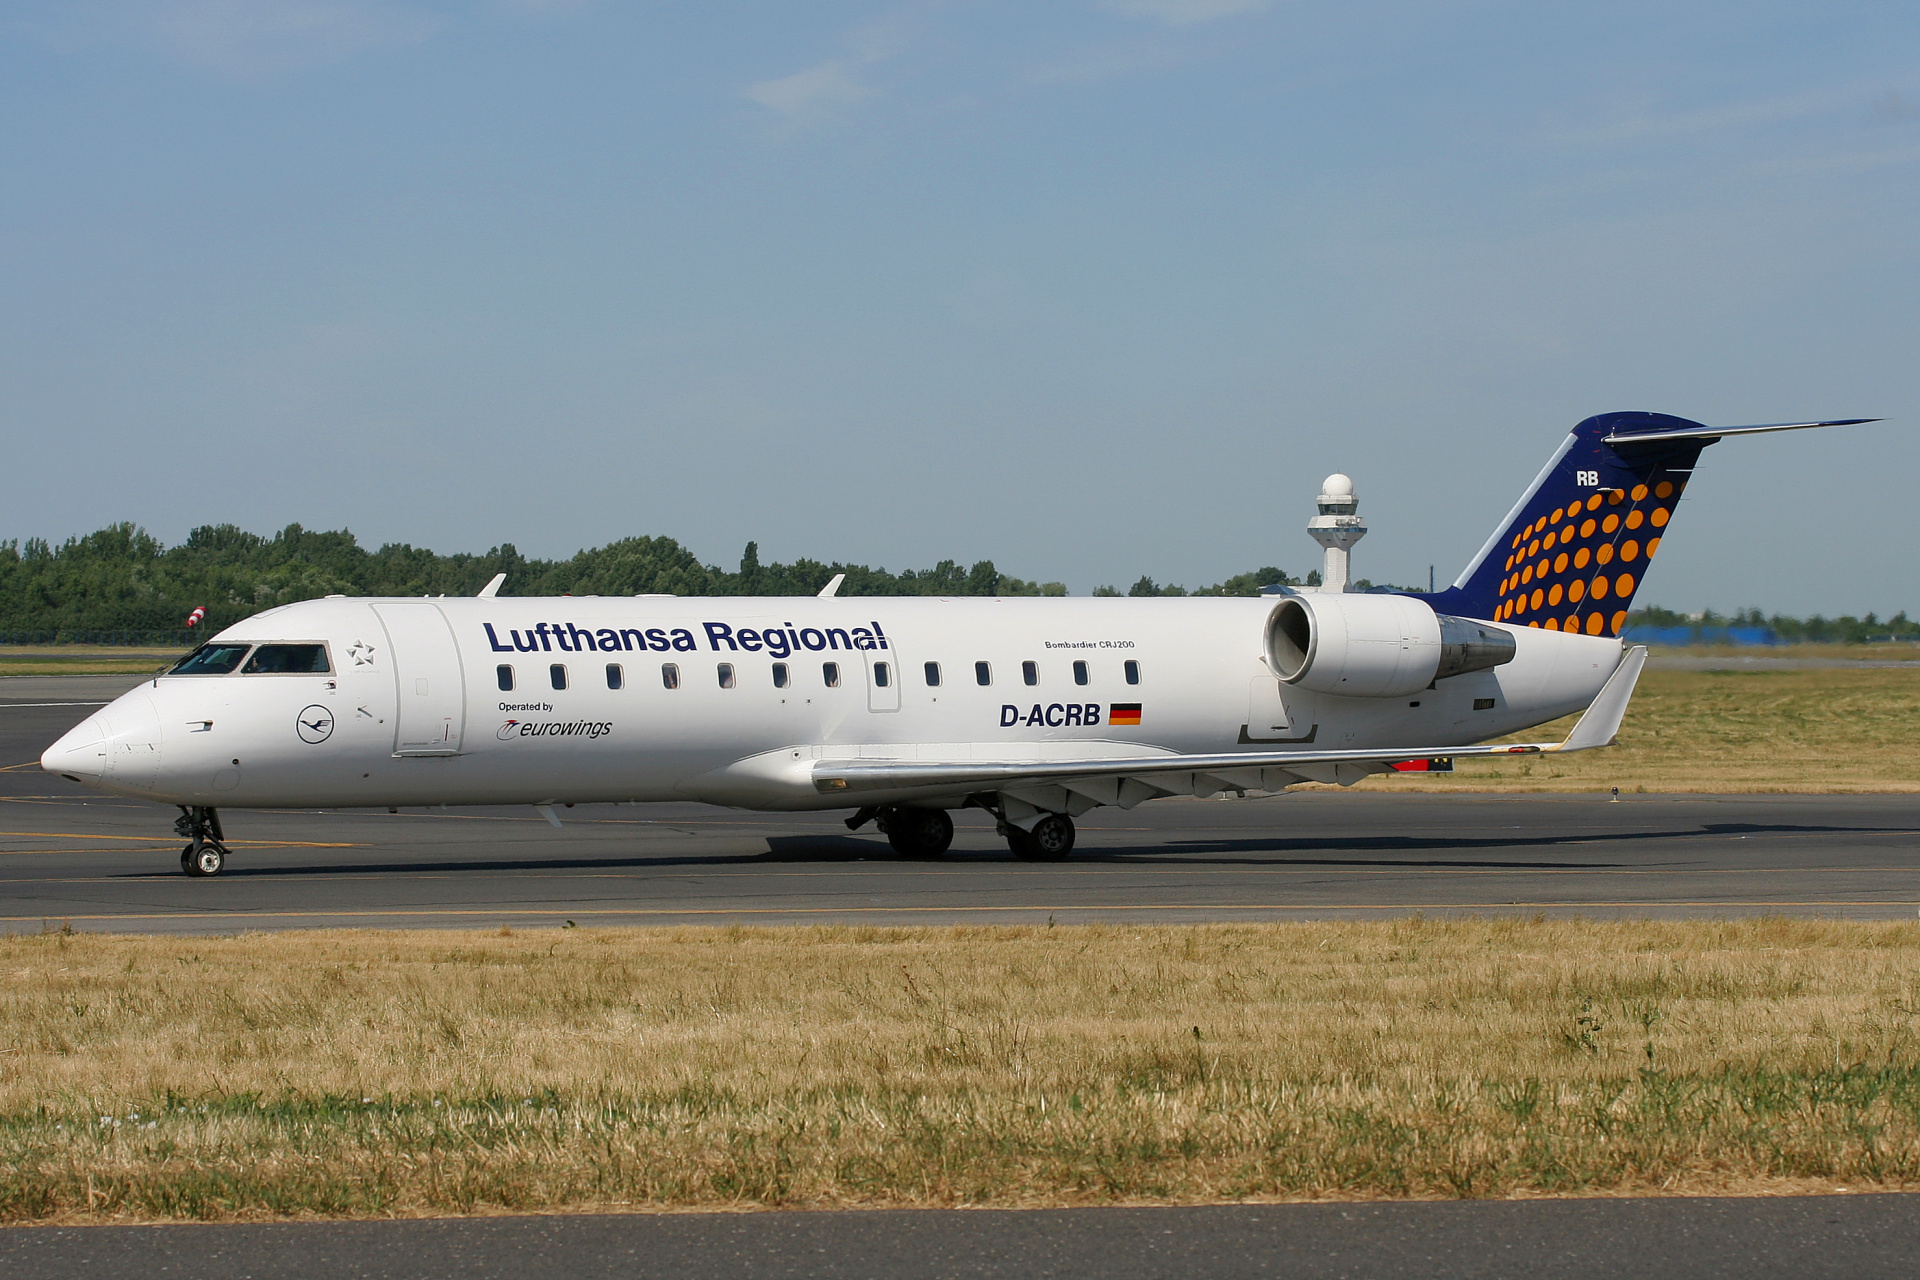 D-ACRB (Eurowings) (Aircraft » EPWA Spotting » Bombardier CL-600 Regional Jet » CRJ-200 » Lufthansa Regional)